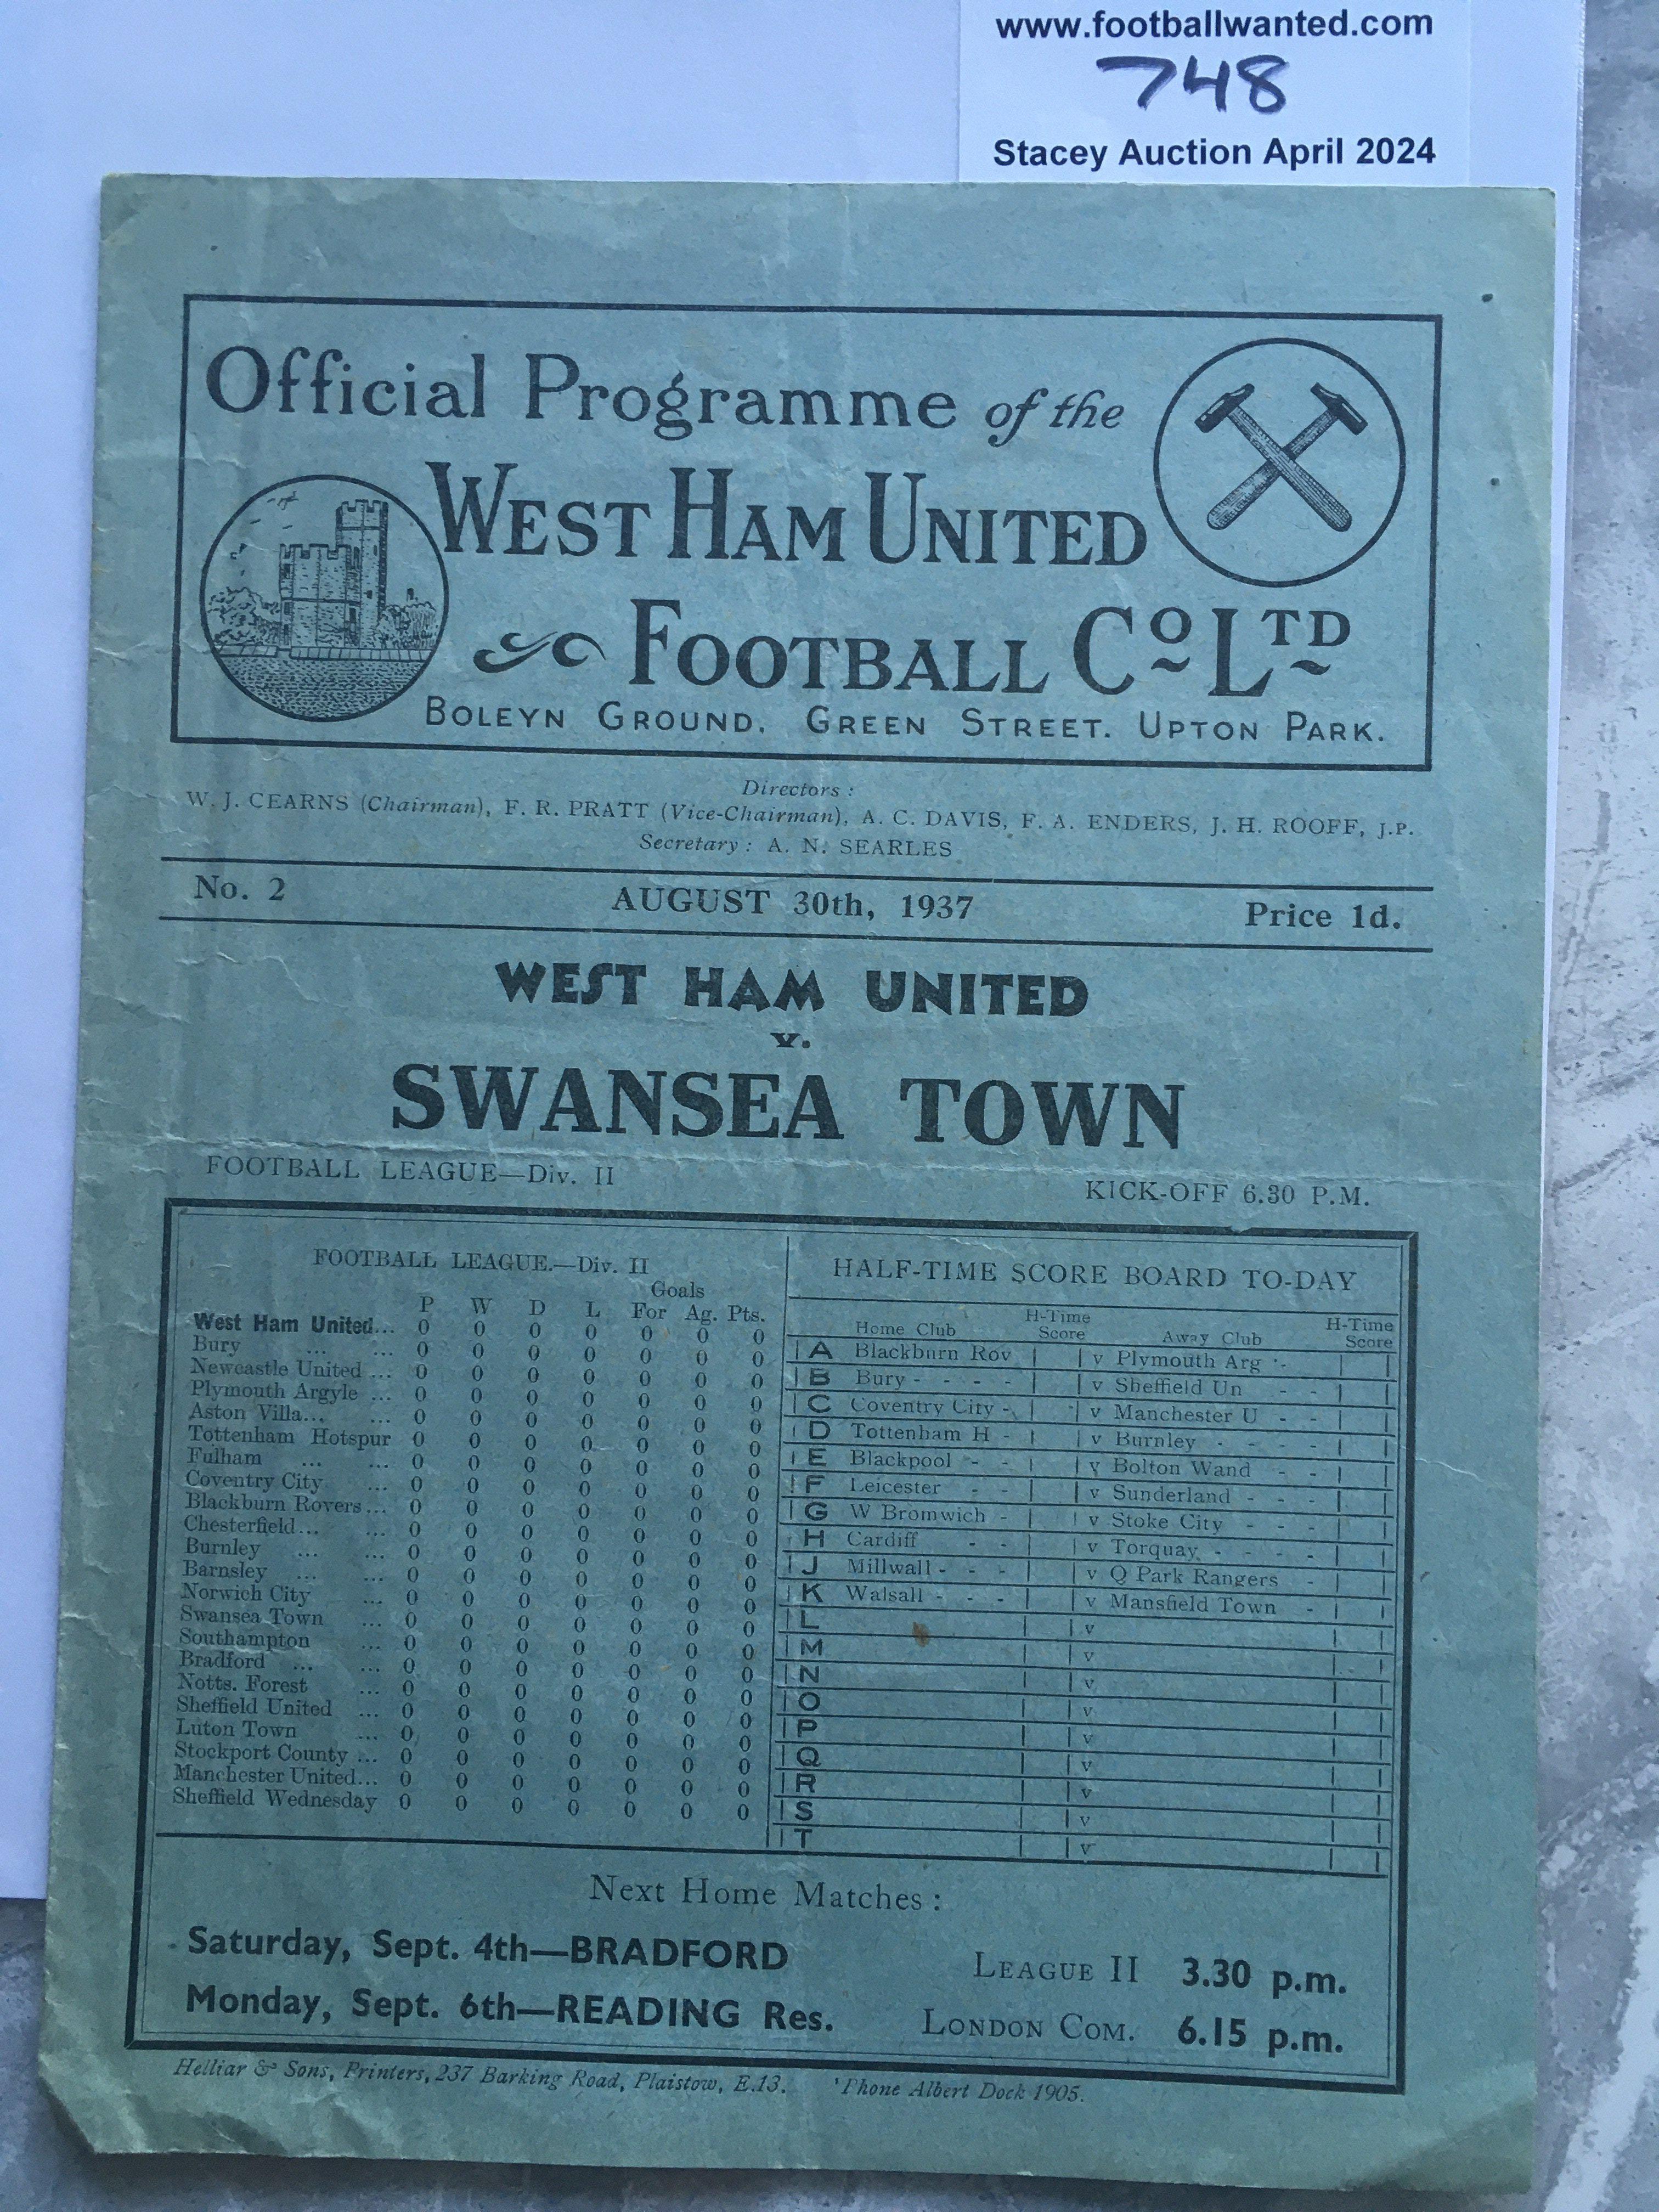 37/38 West Ham v Swansea Town Football Programme: